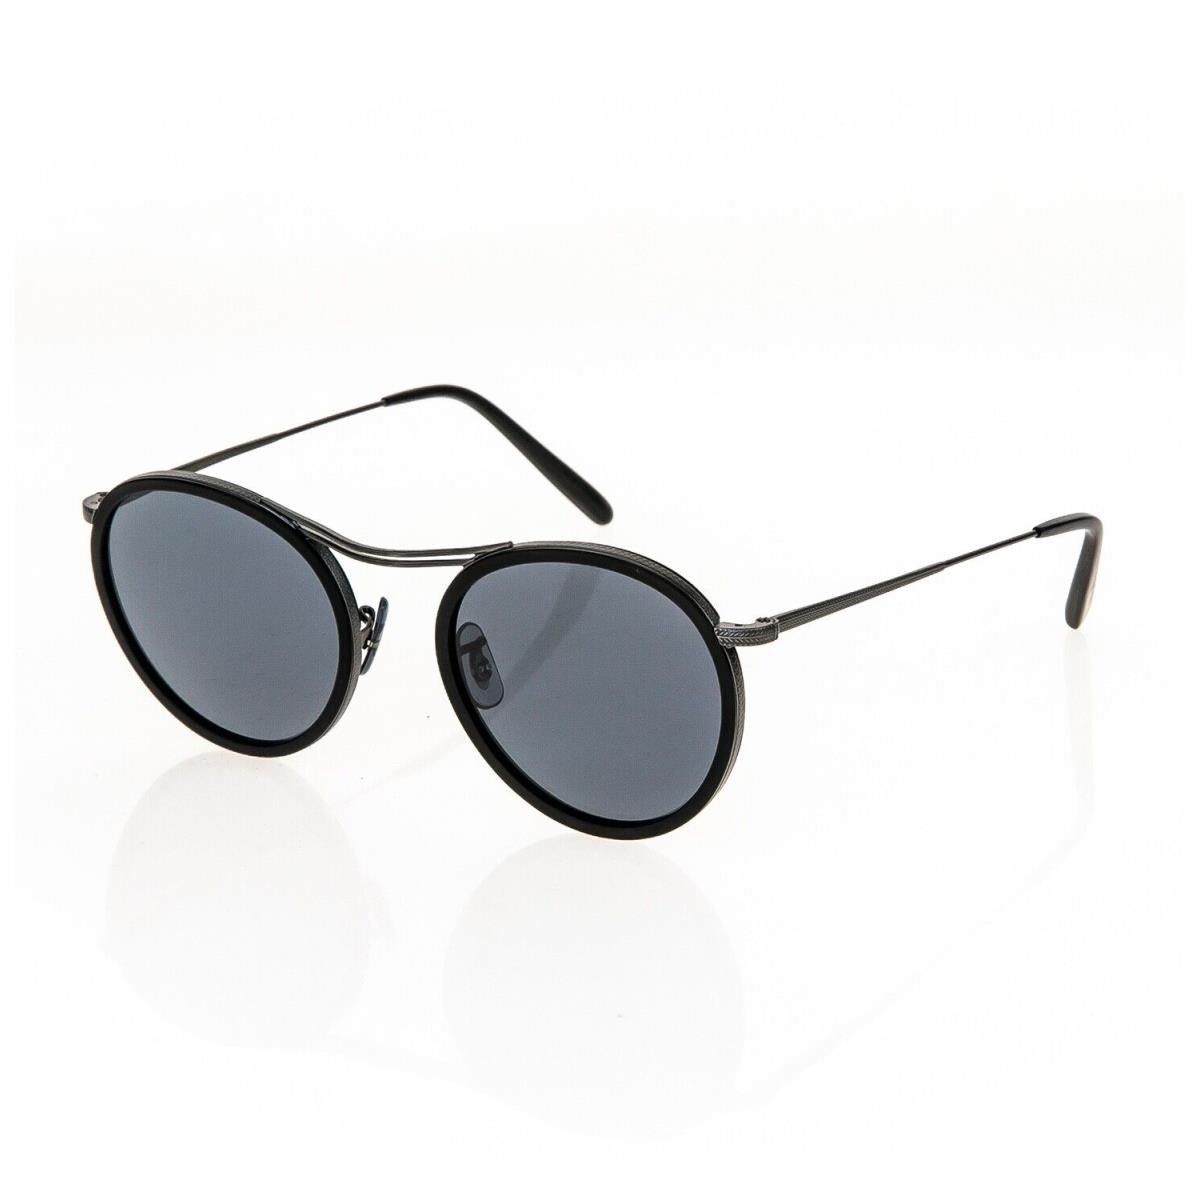 Oliver Peoples sunglasses PEOPLES - Frame: Black, Lens: Gray 2